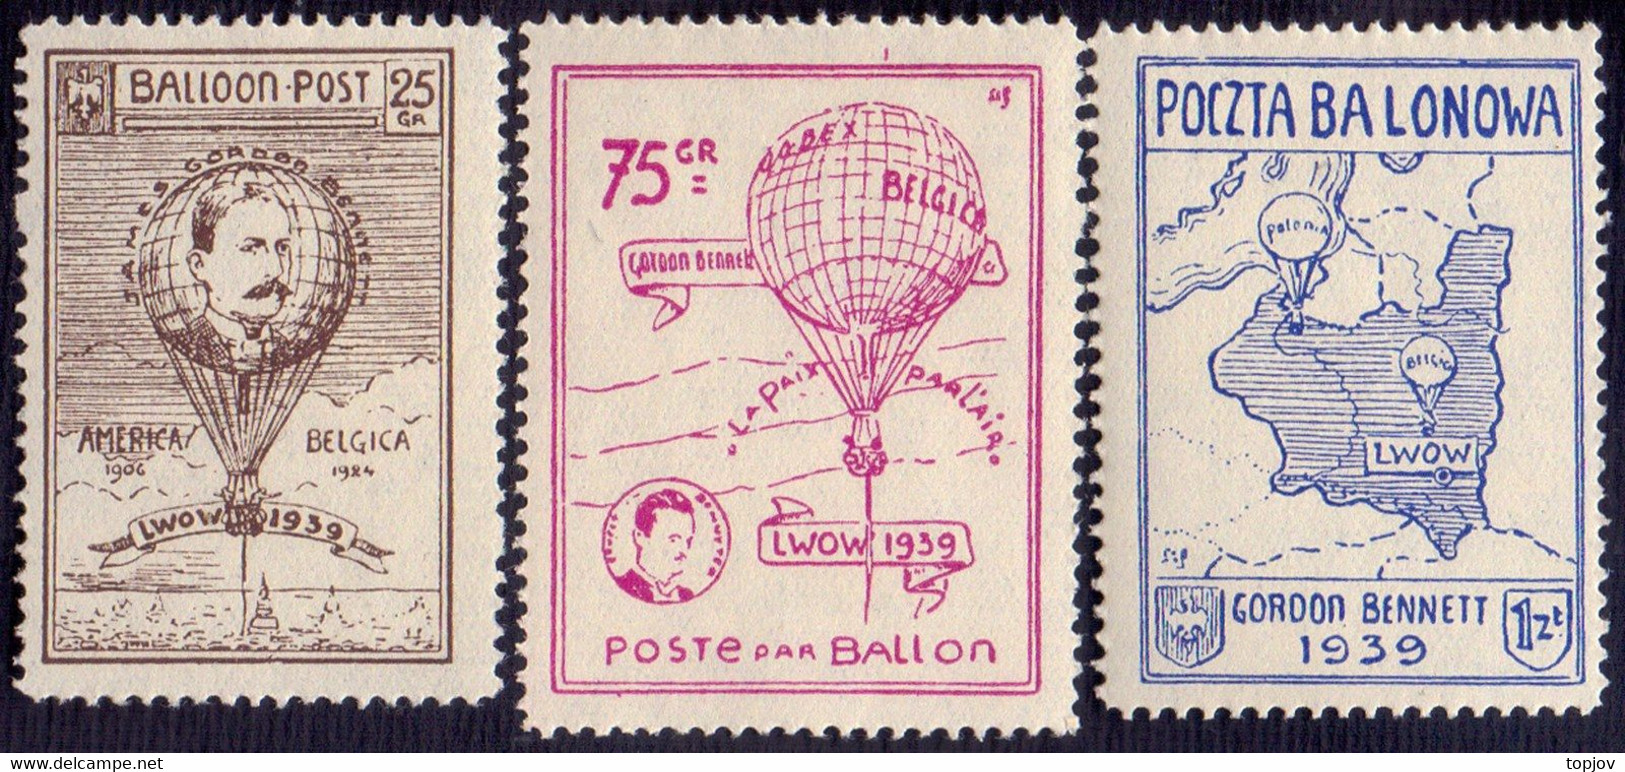 POLAND - GORDON BENNETT - POCZTA BALONOWA  LWOW - **MNH - 1939 - Labels